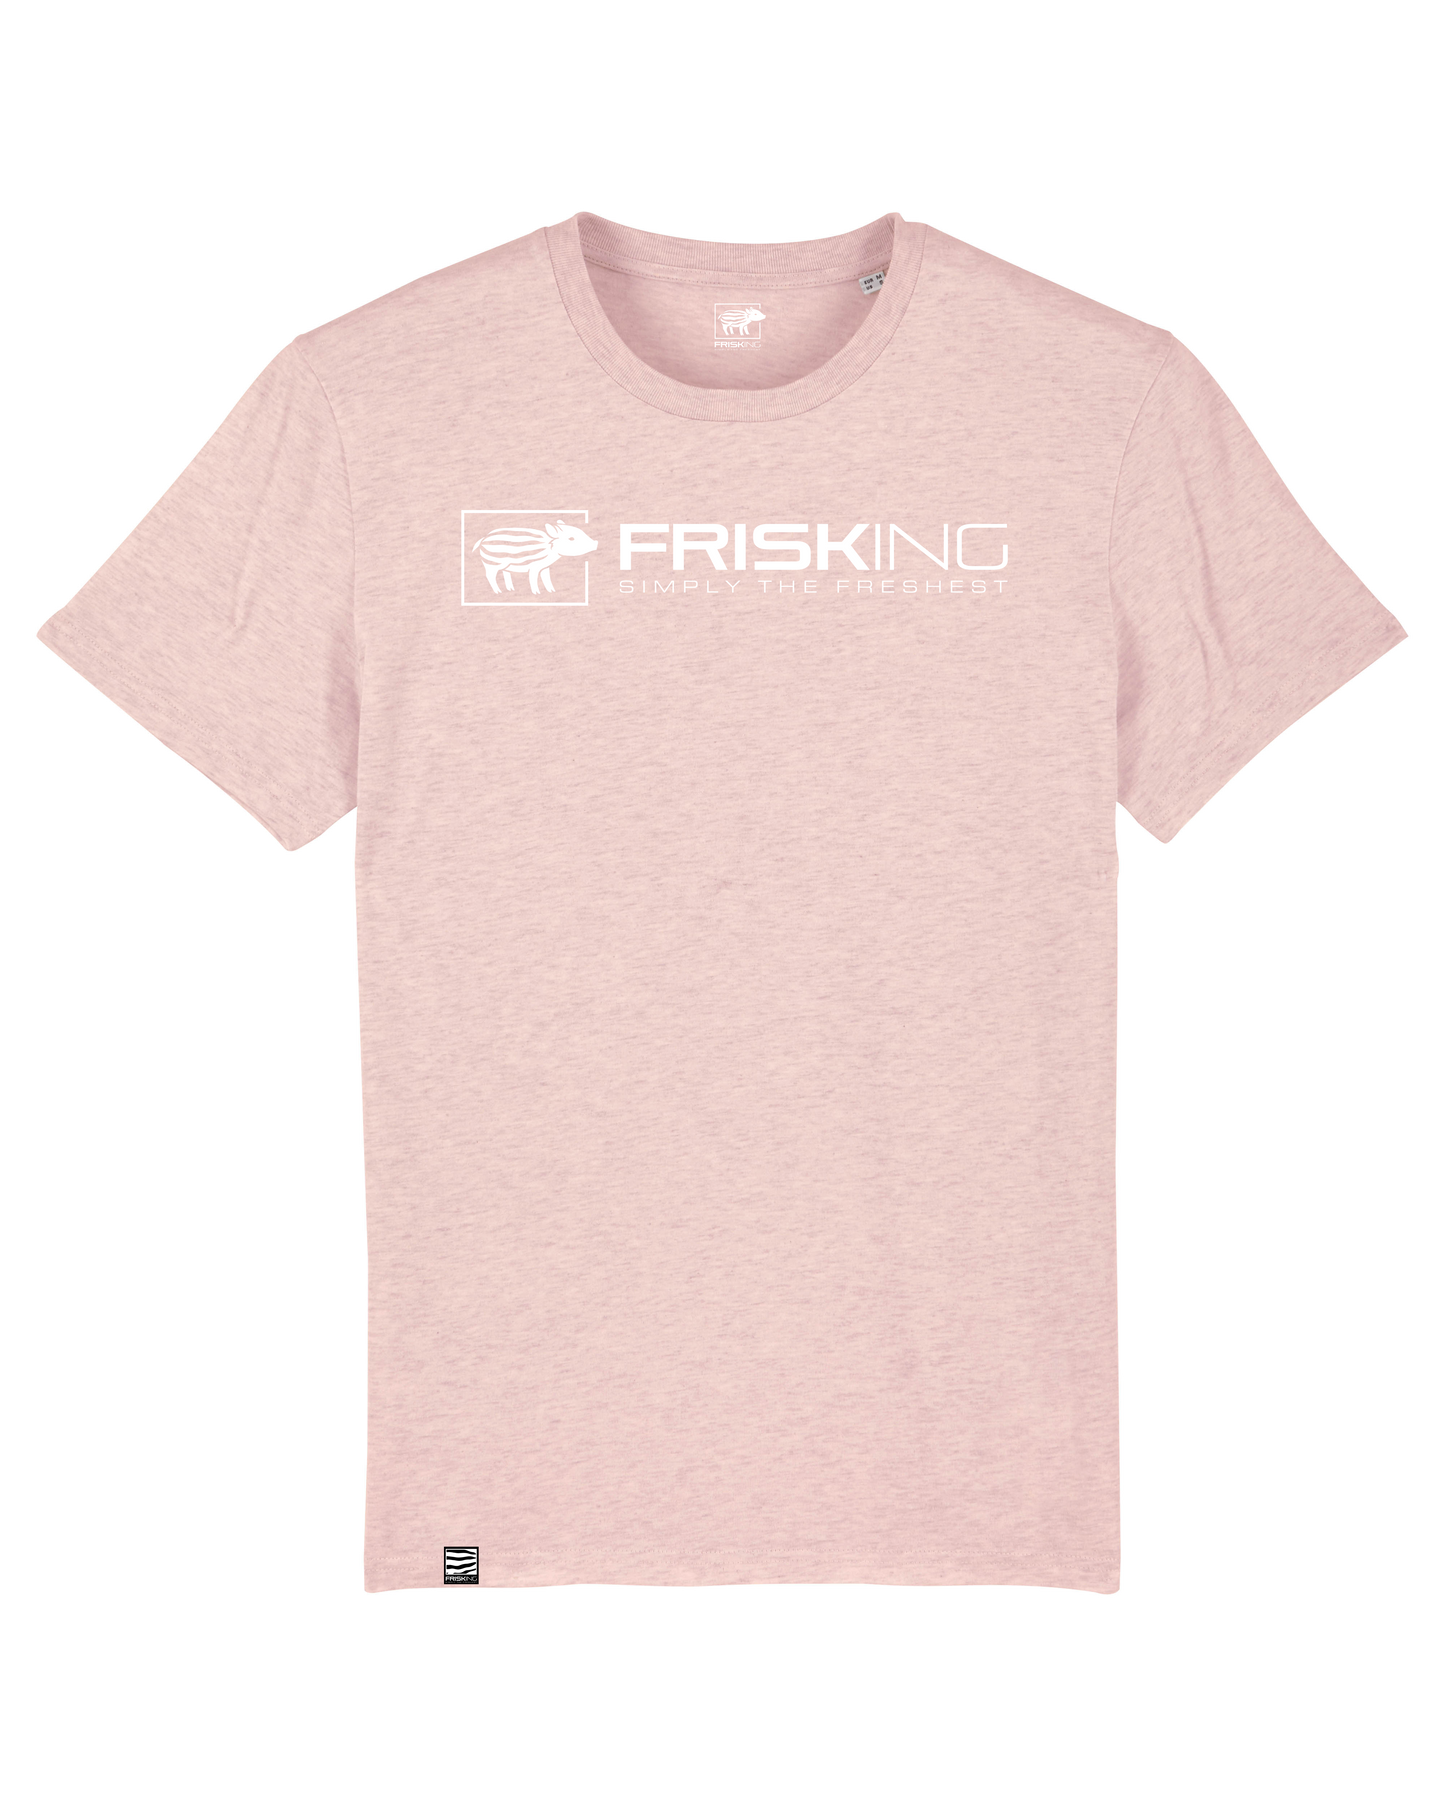 FRISKING Men T-Shirt "classic", Shirt, T Shirt, simply the freshest